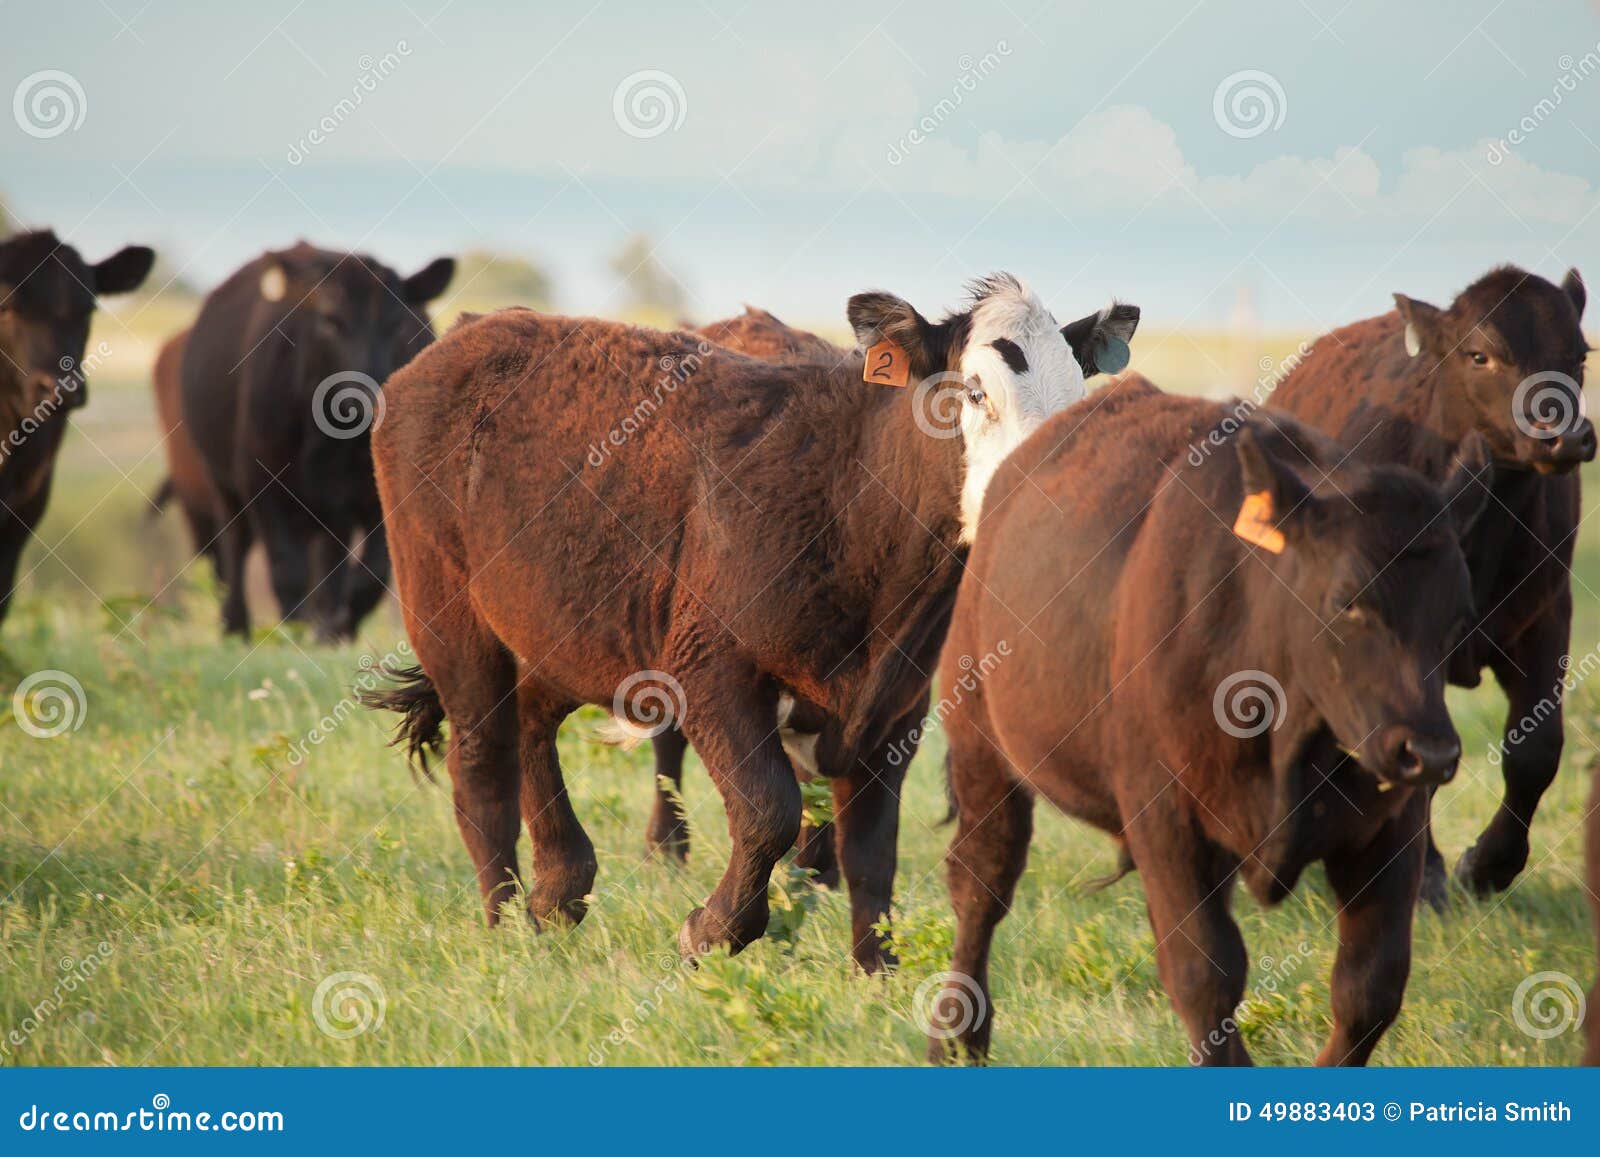 cattle run